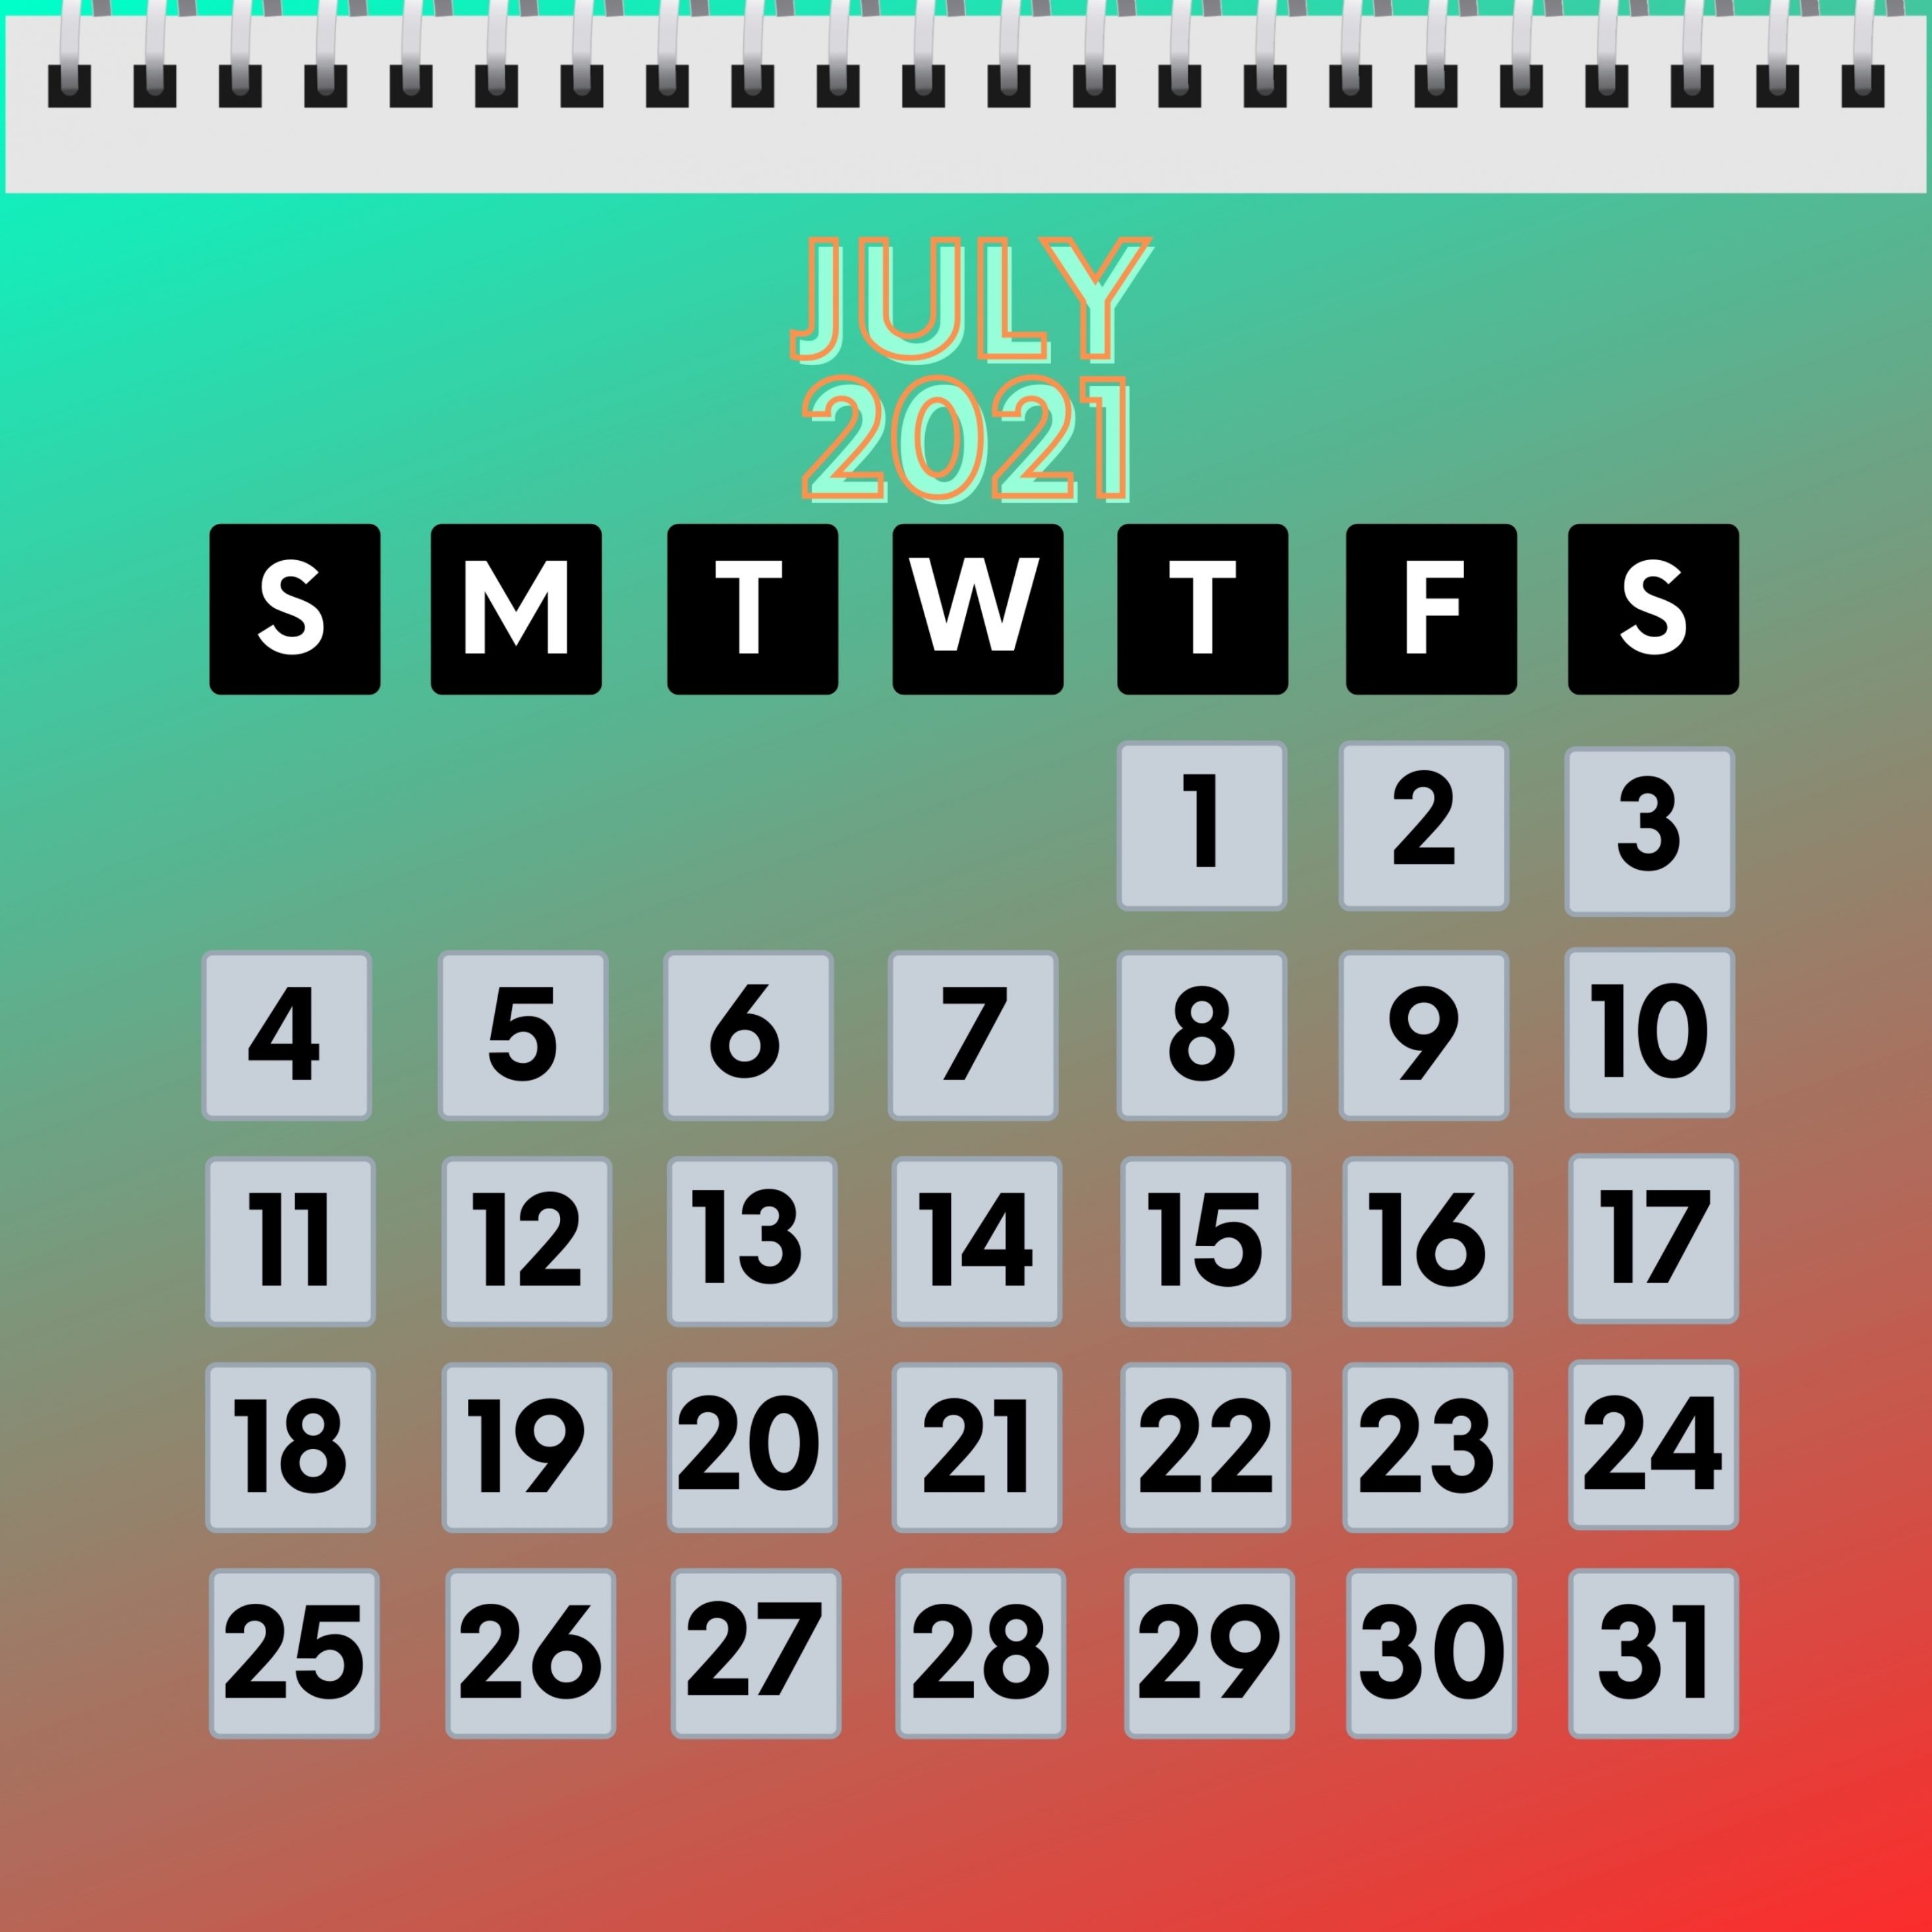 2932x2932 iPad Pro wallpaper 4k July 2021 Calendar iPad Wallpaper 2932x2932 pixels resolution